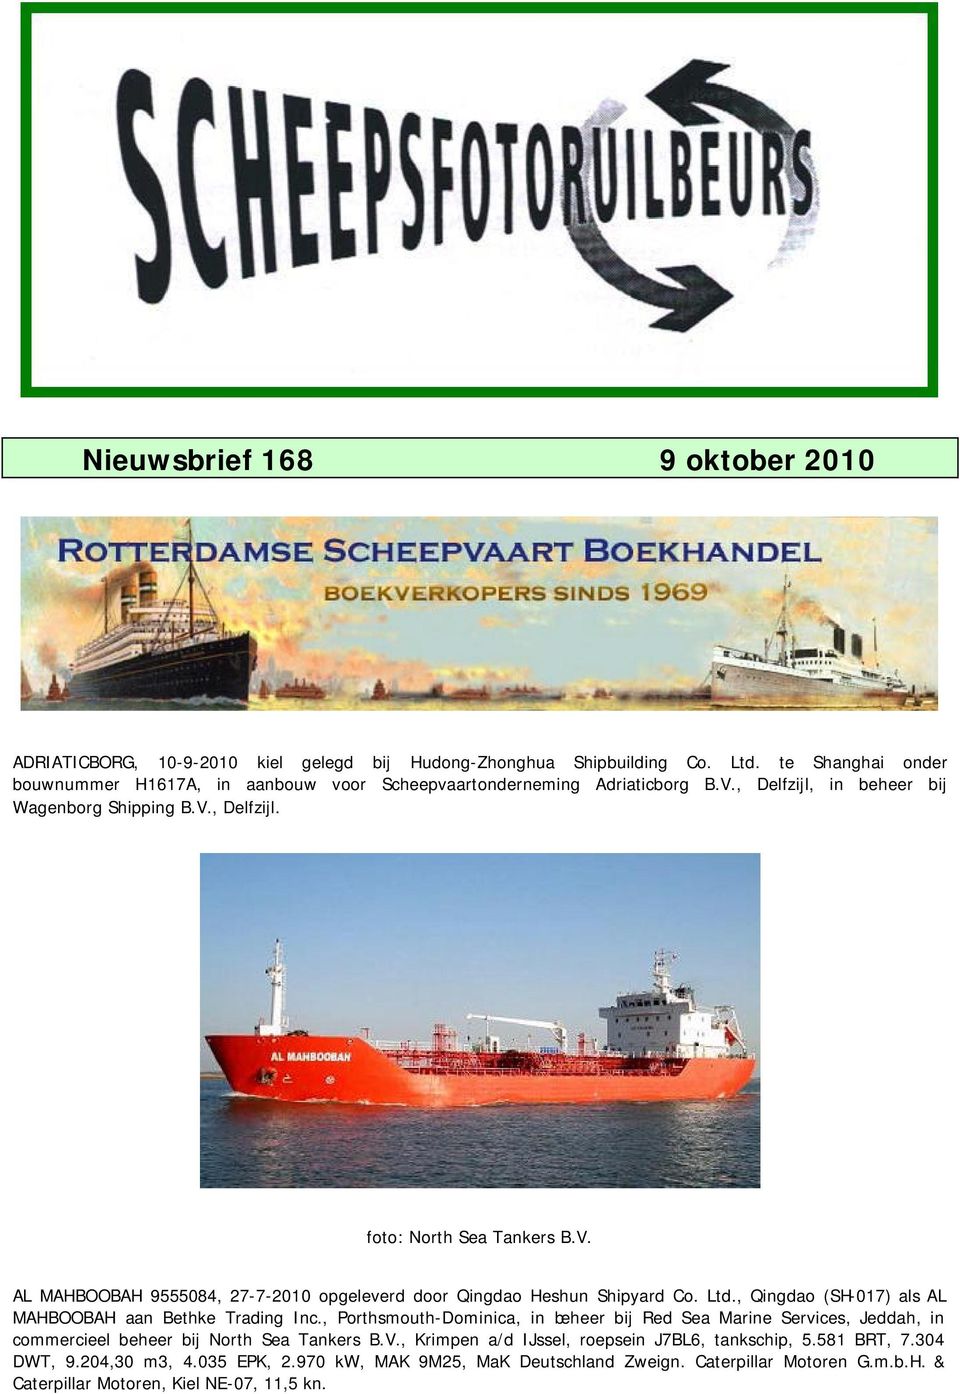 Ltd., Qingdao (SH-017) als AL MAHBOOBAH aan Bethke Trading Inc., Porthsmouth-Dominica, in beheer bij Red Sea Marine Services, Jeddah, in commercieel beheer bij North Sea Tankers B.V.